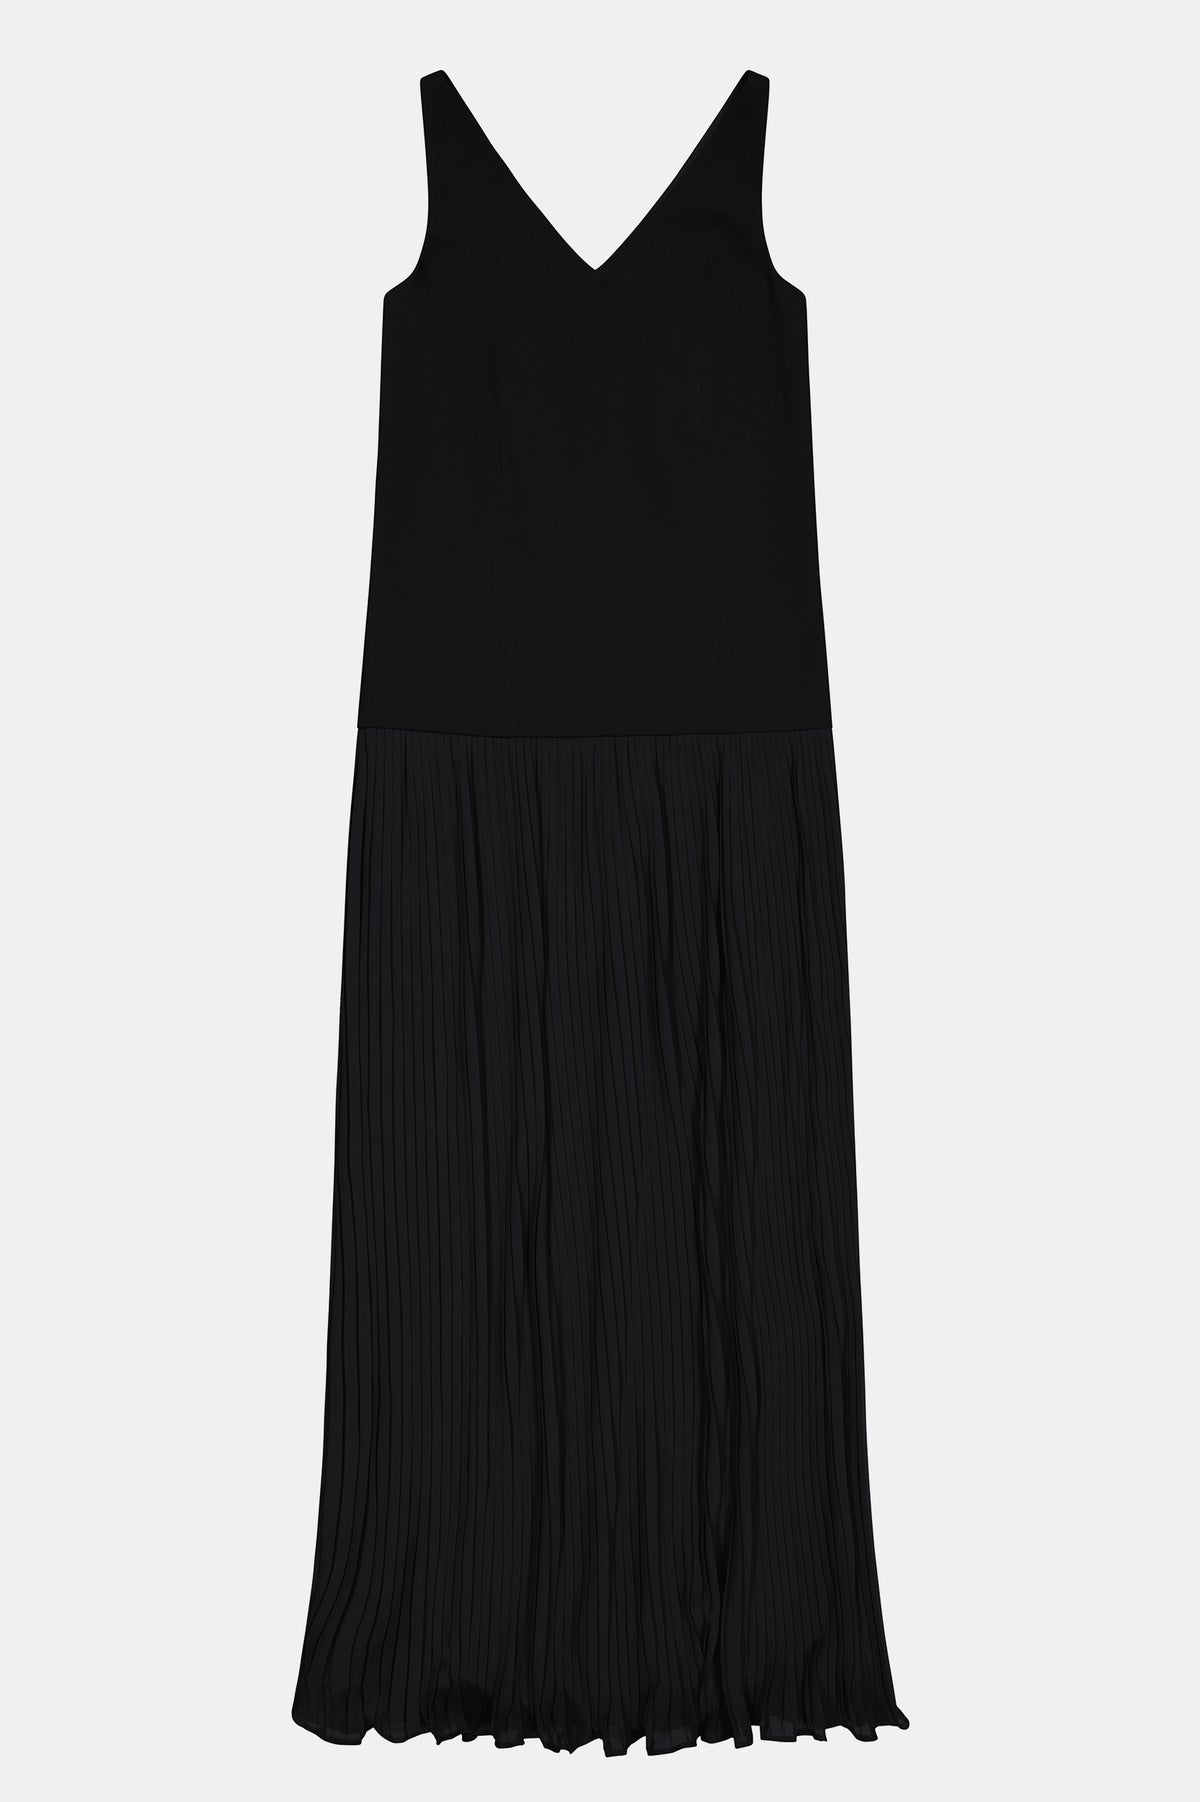 Bella Dress in Black